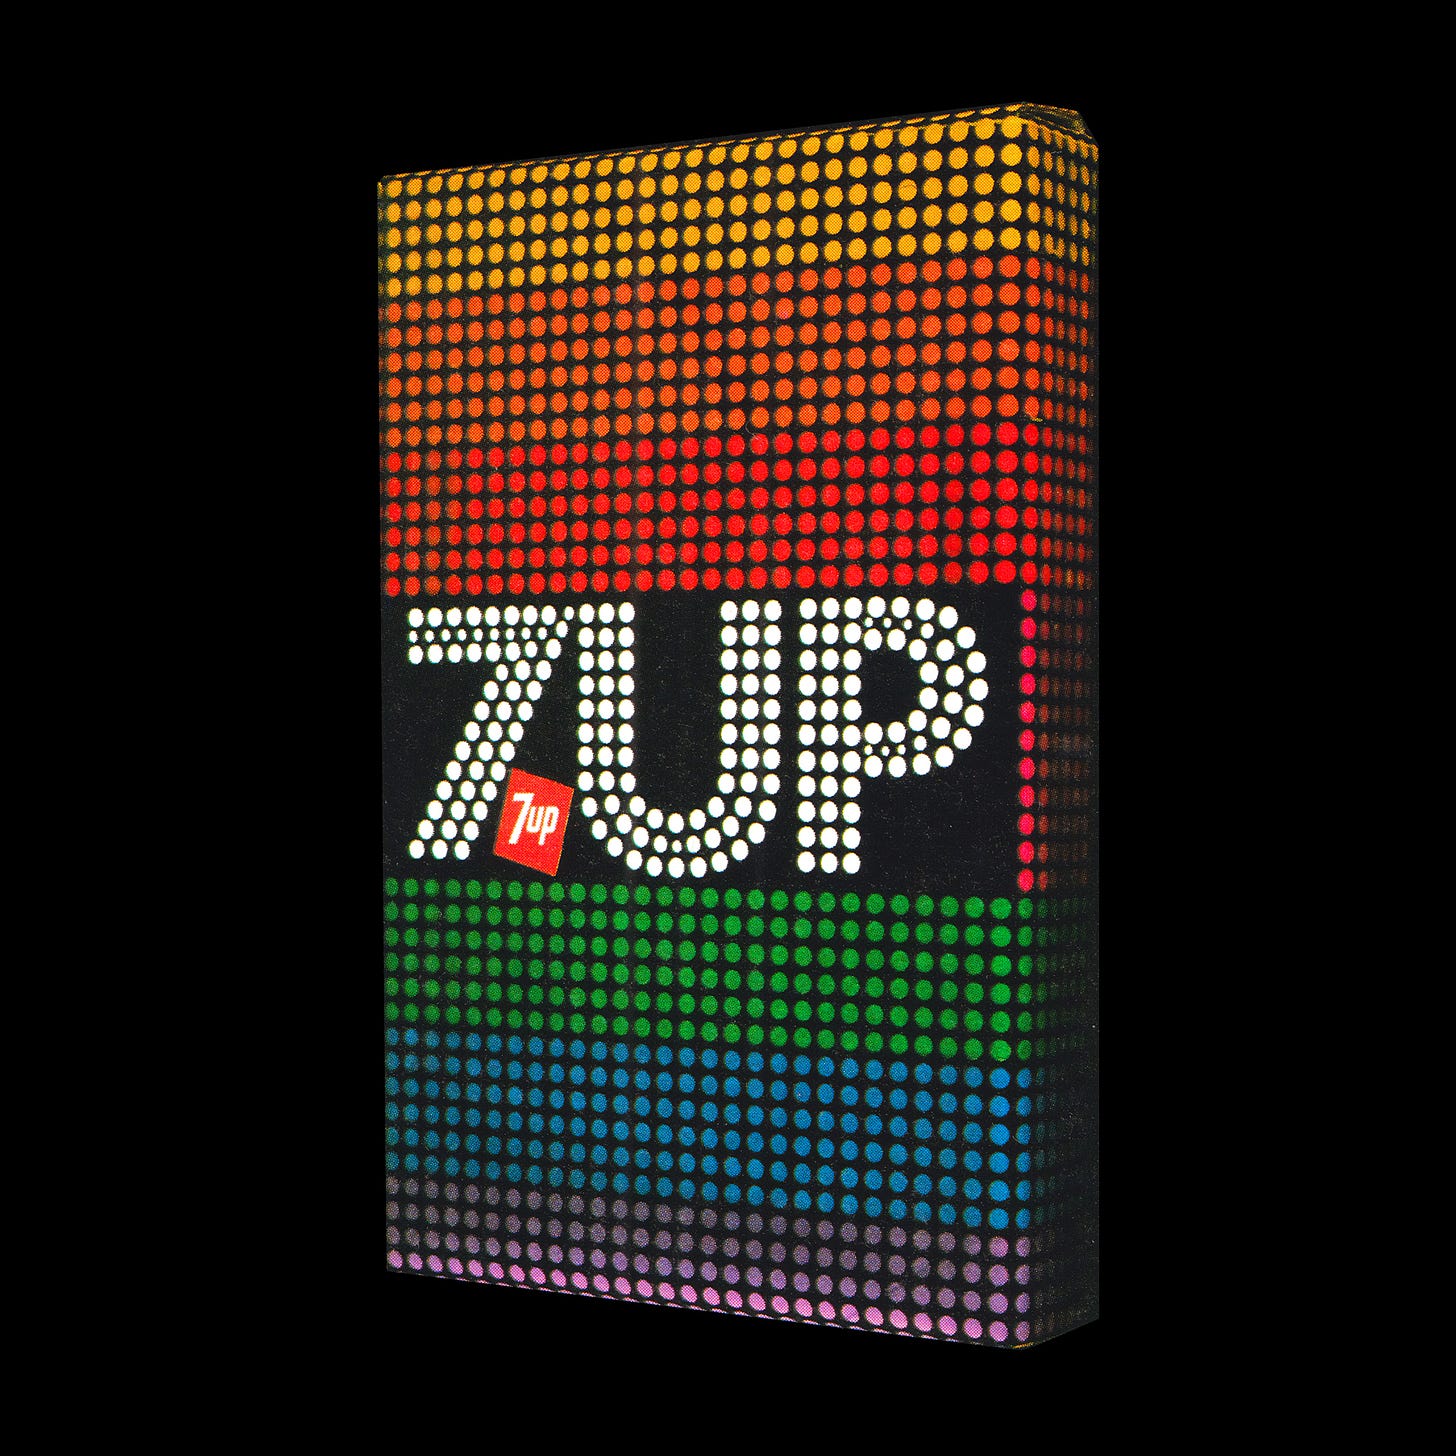 7UP 1970s logo and packaging design by Thomas Miller, Morton Goldsholl, Morton Goldsholl Associates, LogoArchive, Logo Histories